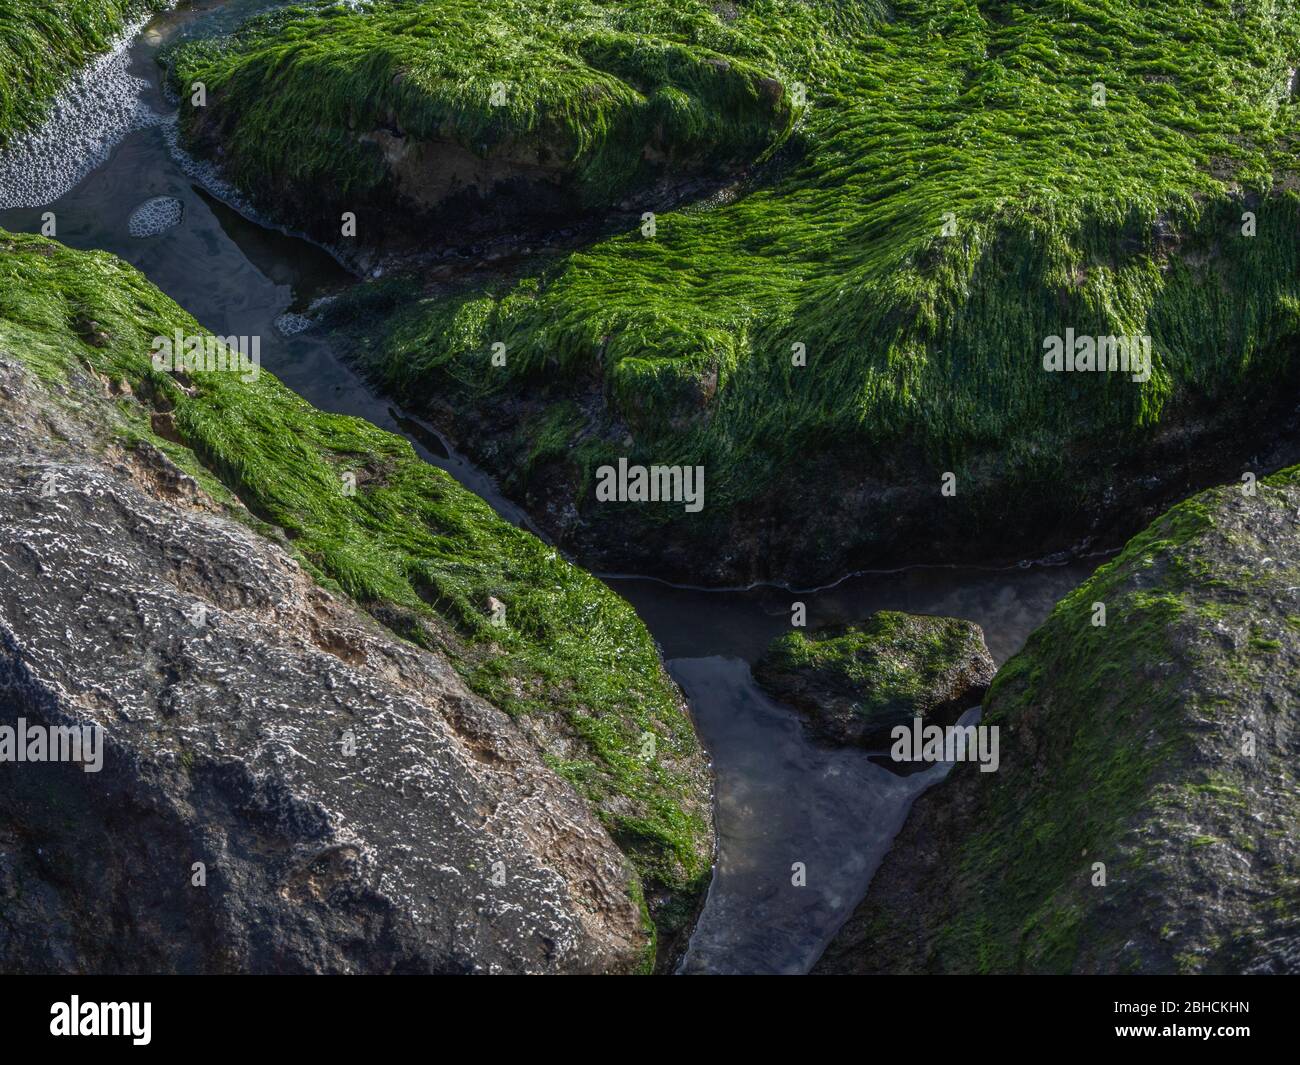 Rocas húmedas cubiertas de algas verdes Foto de stock